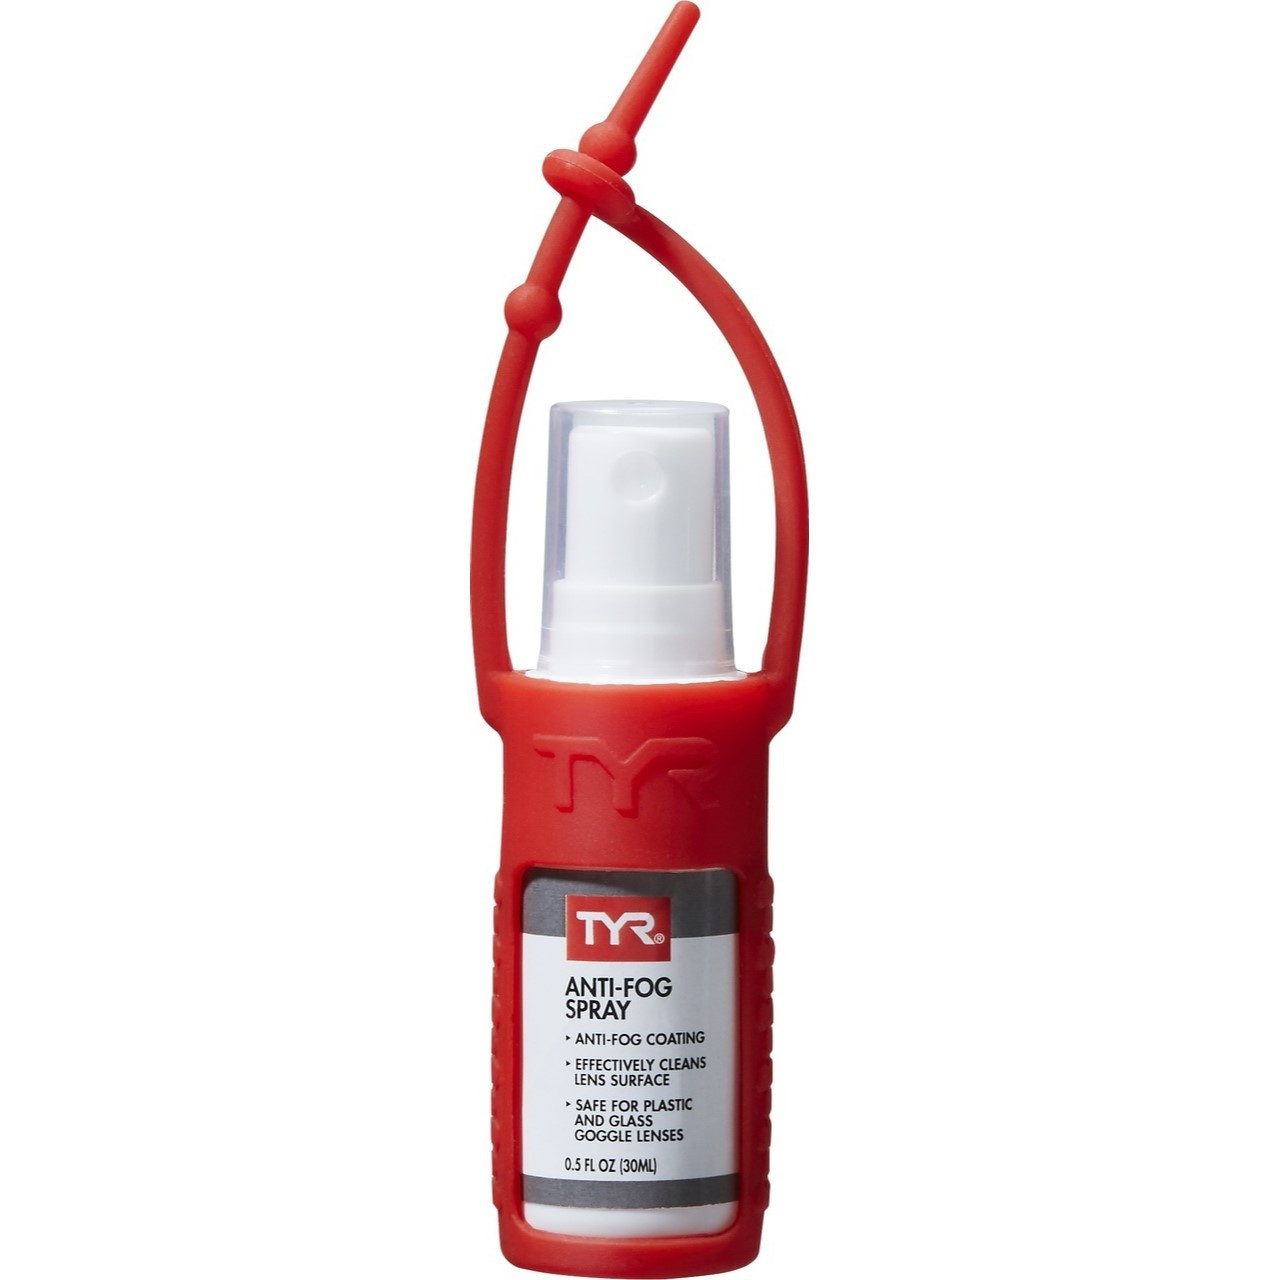 TYR Anti-Fog Spray 0.5 oz. with Case - 2018